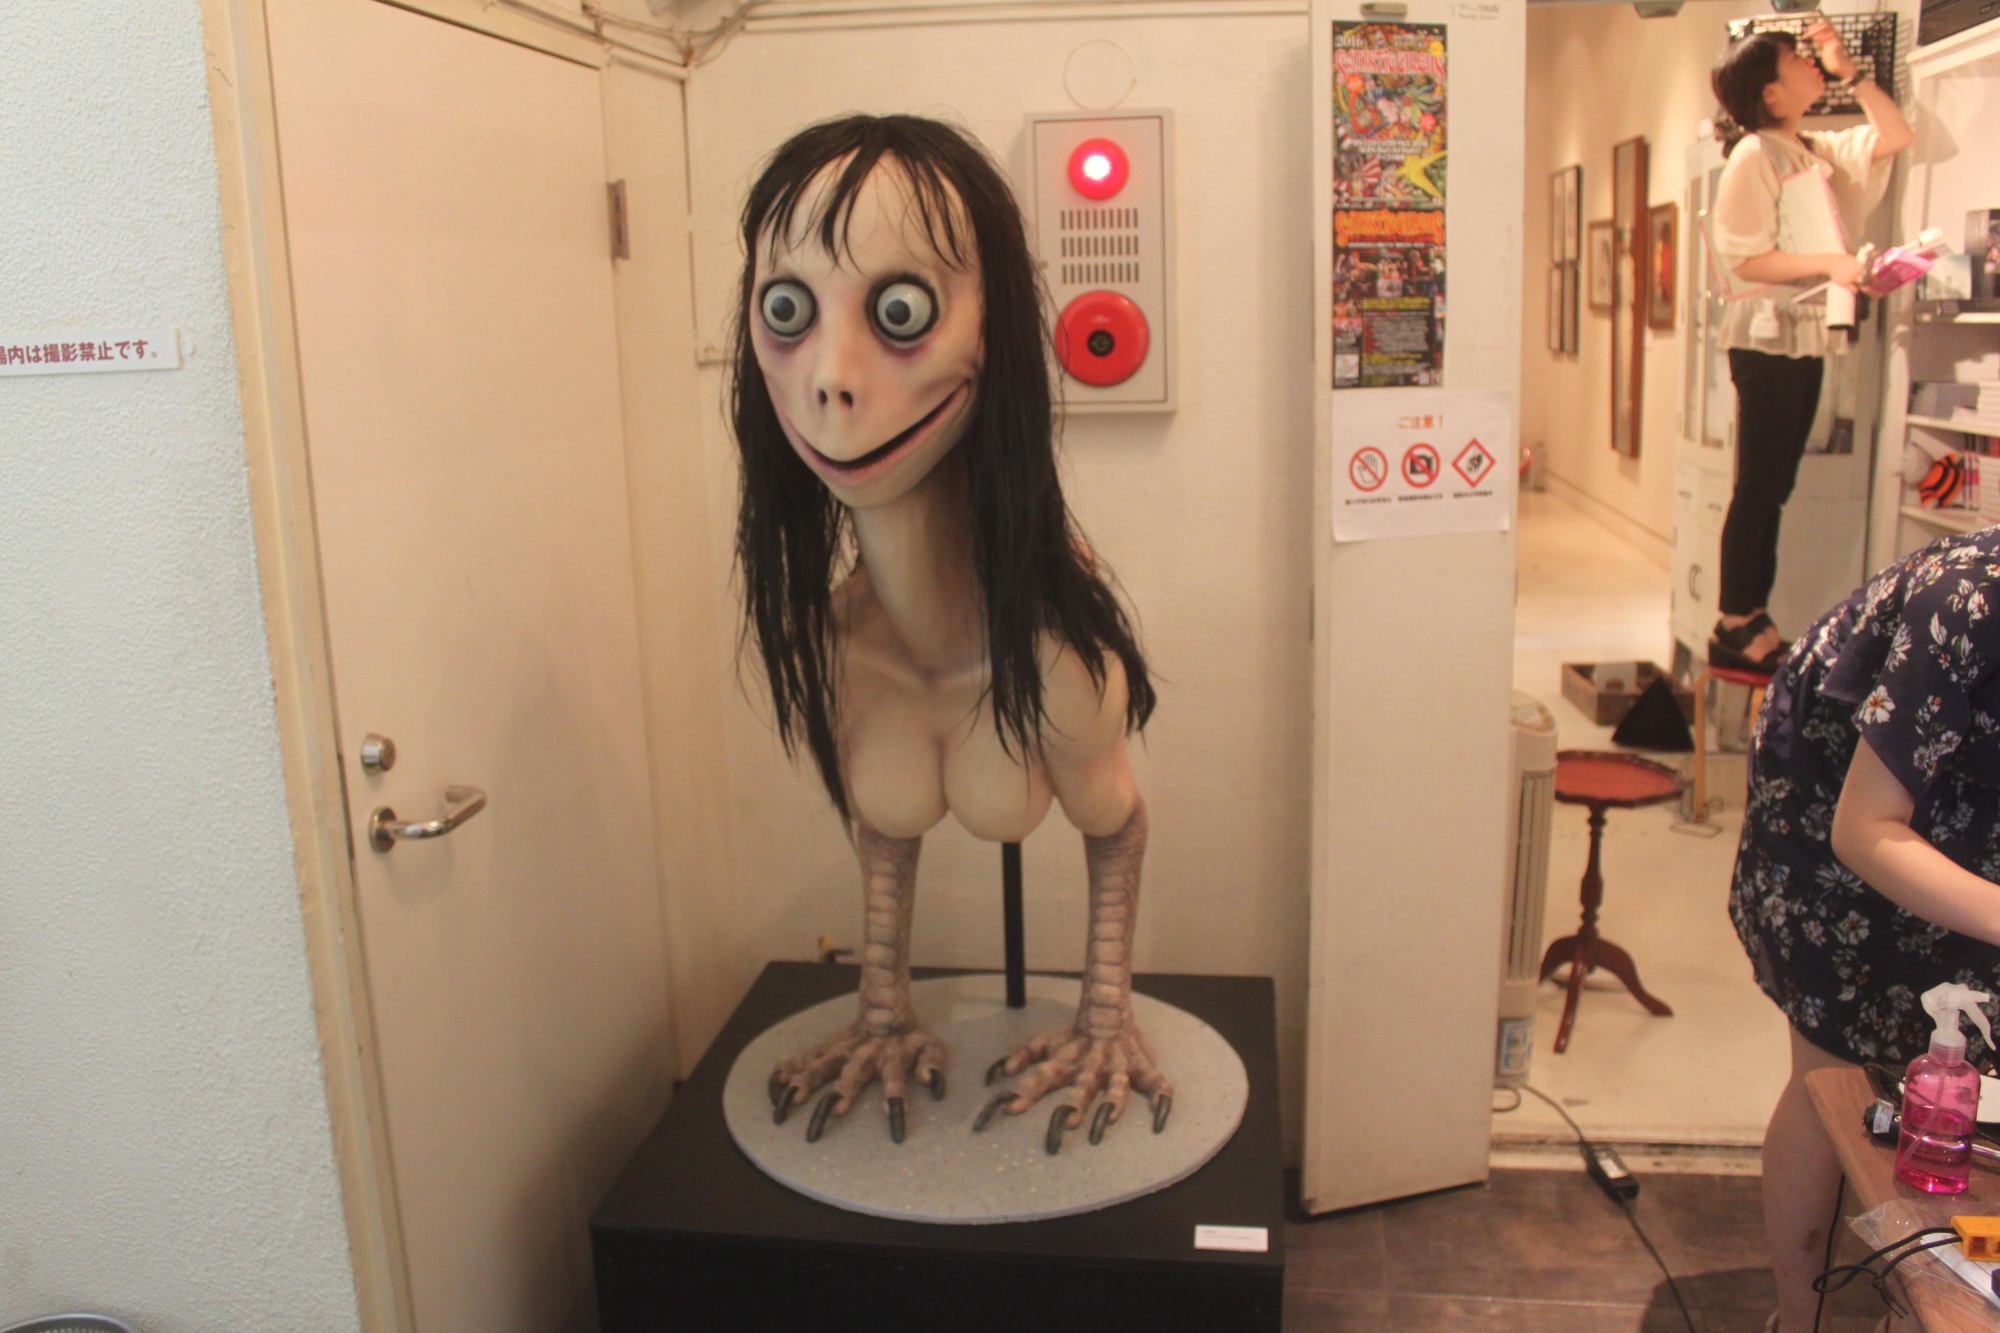 Japanese artist behind ghastly creature in viral Momo Challenge baffled by disturbing hoax